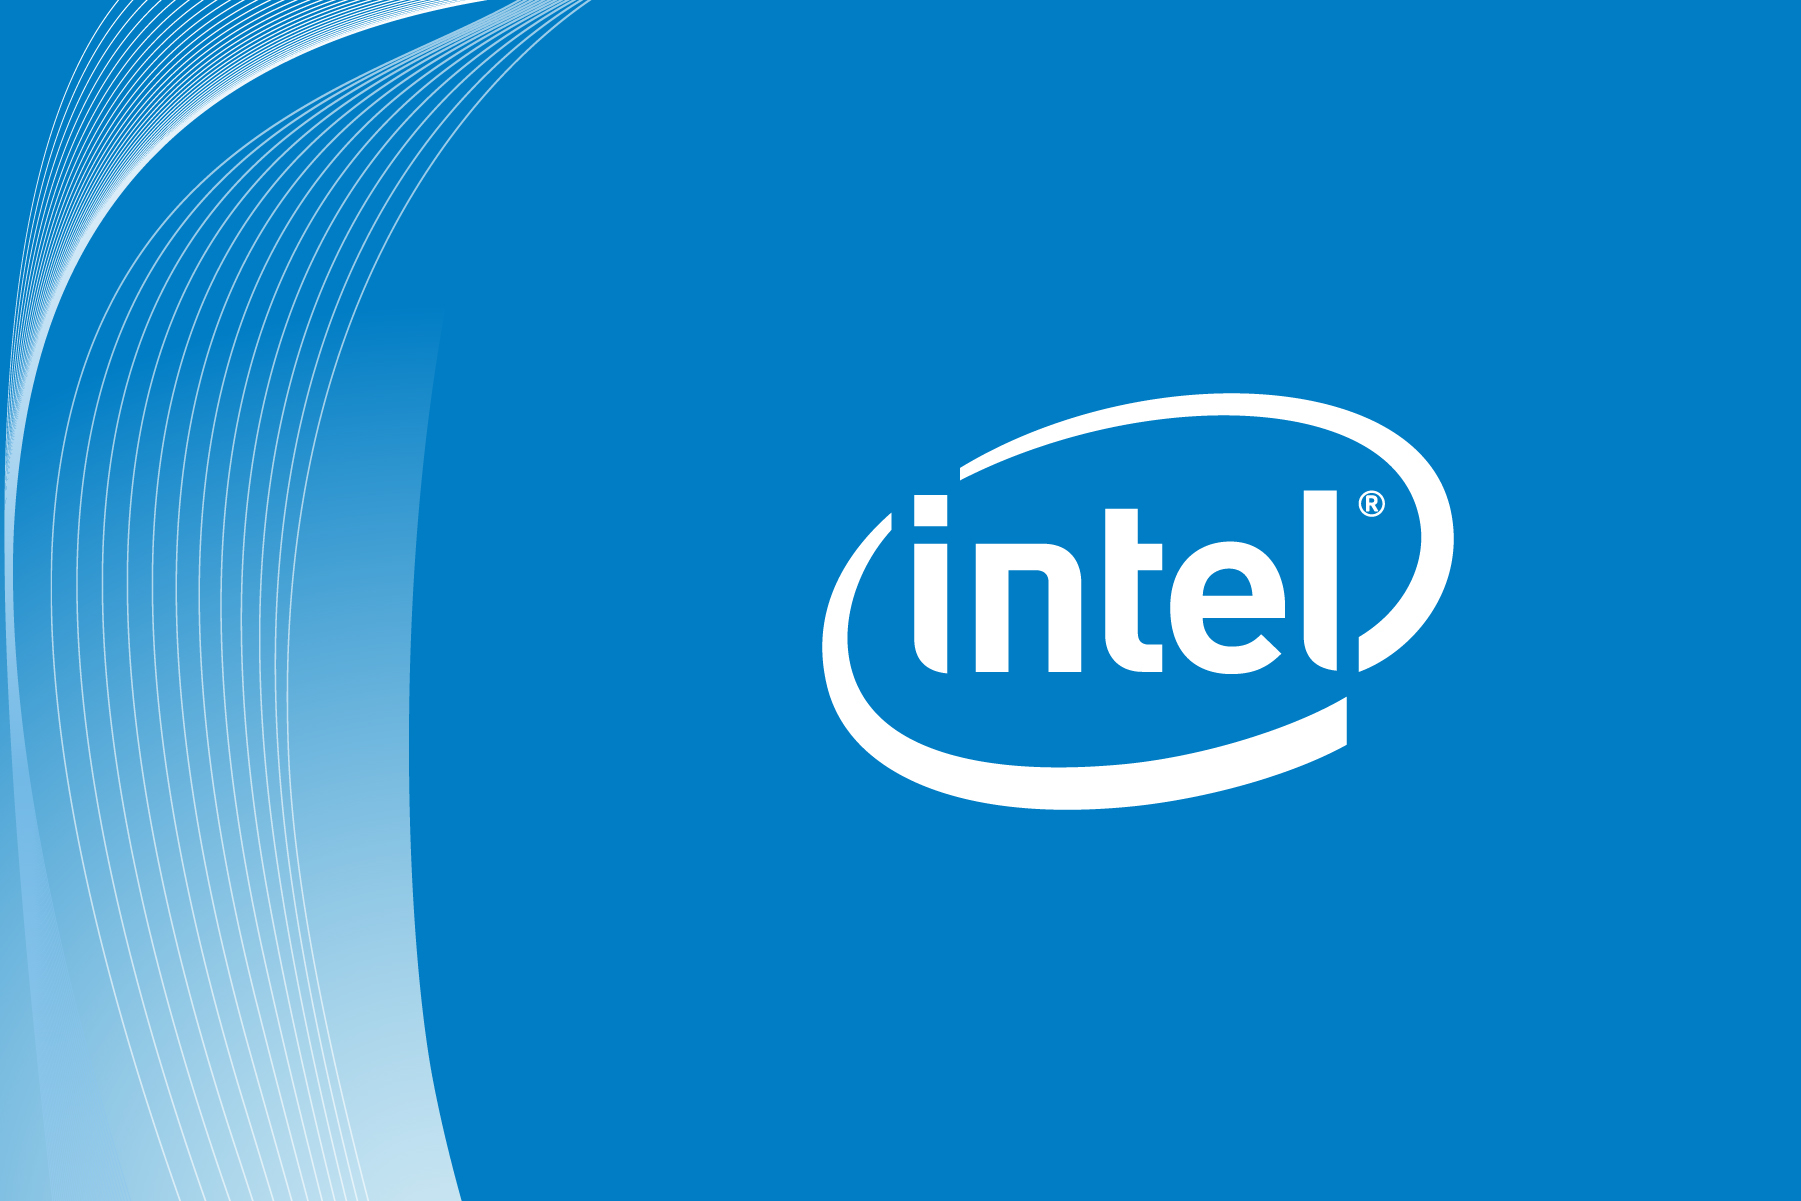 Intel com. Intel logo 1993. Значок Intel. Интел компания логотип. Интел логотип 2020.